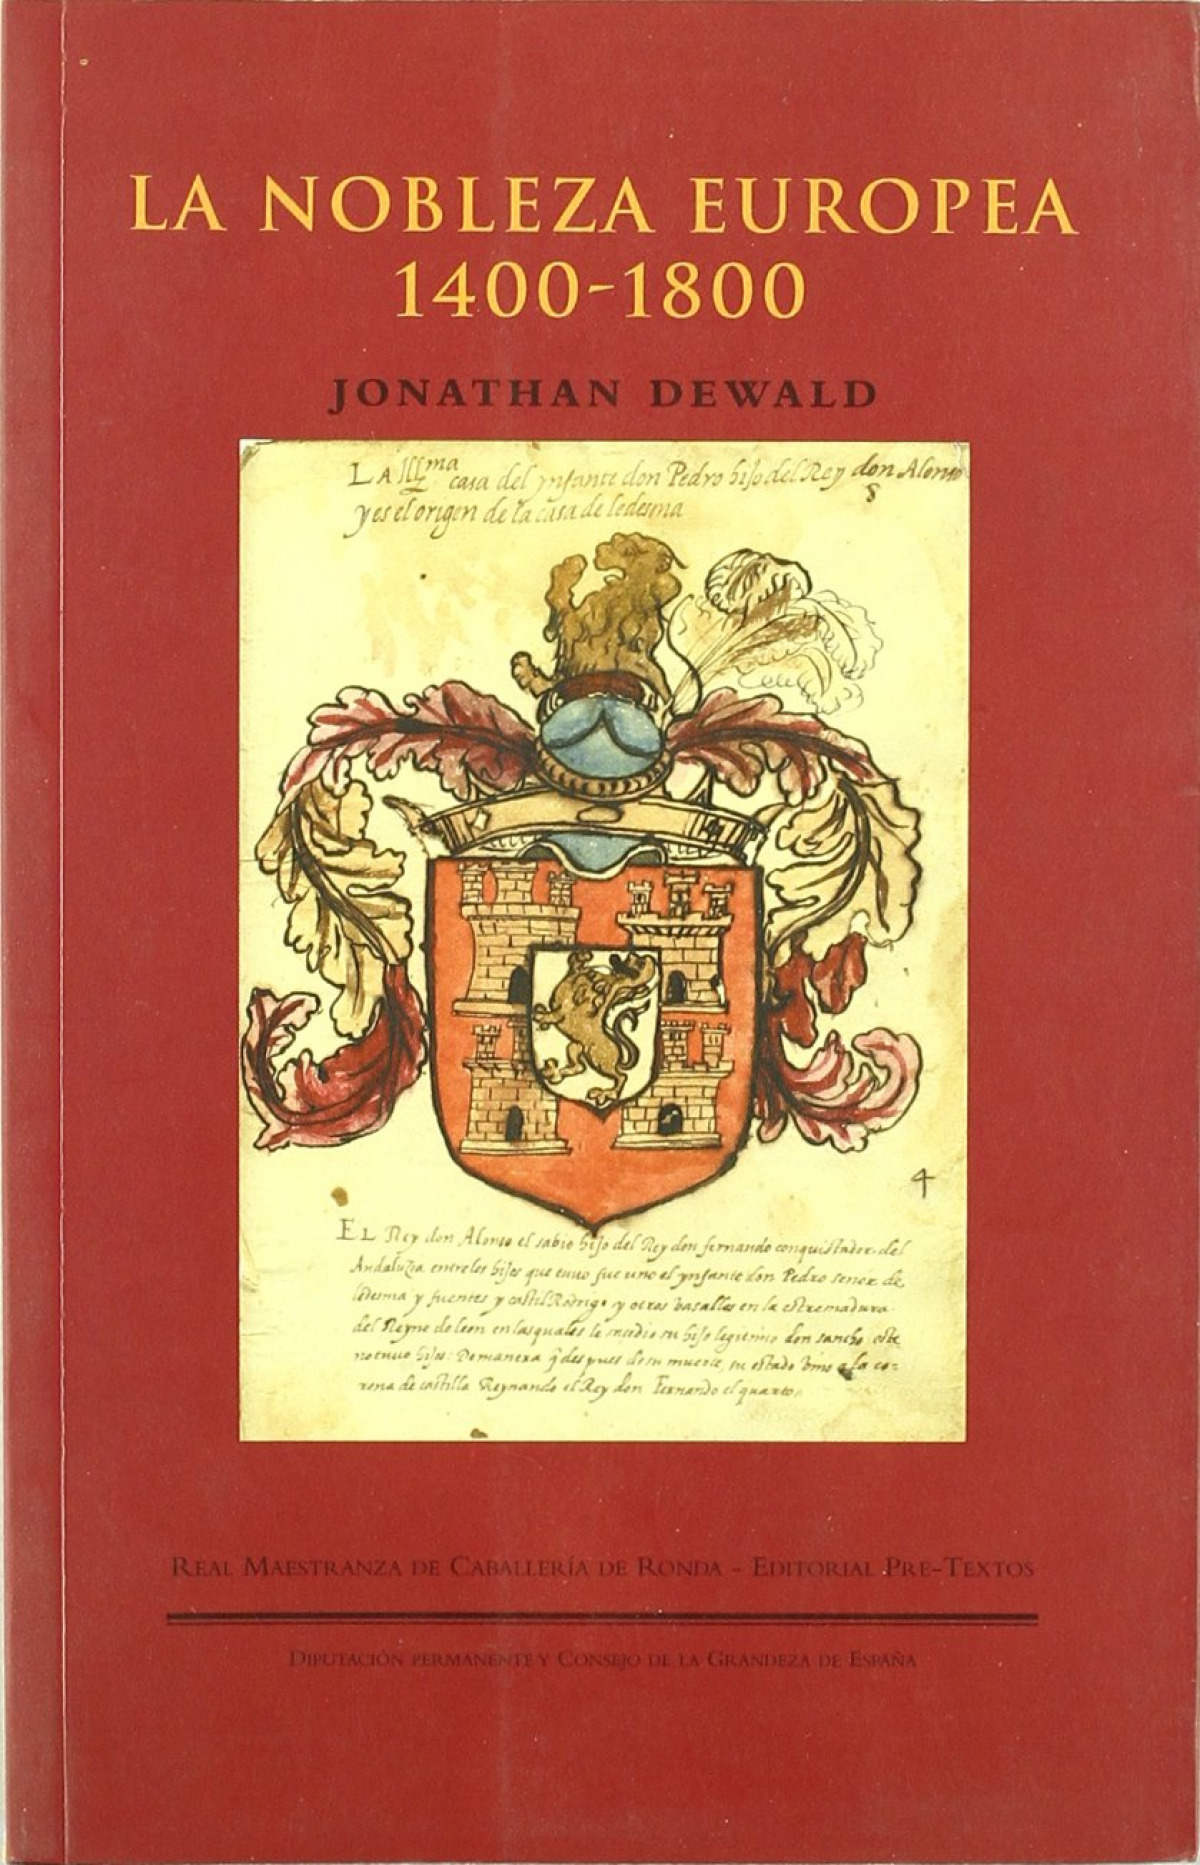 áLa nobleza europea 1400-1800 - Dewald, Jonathan